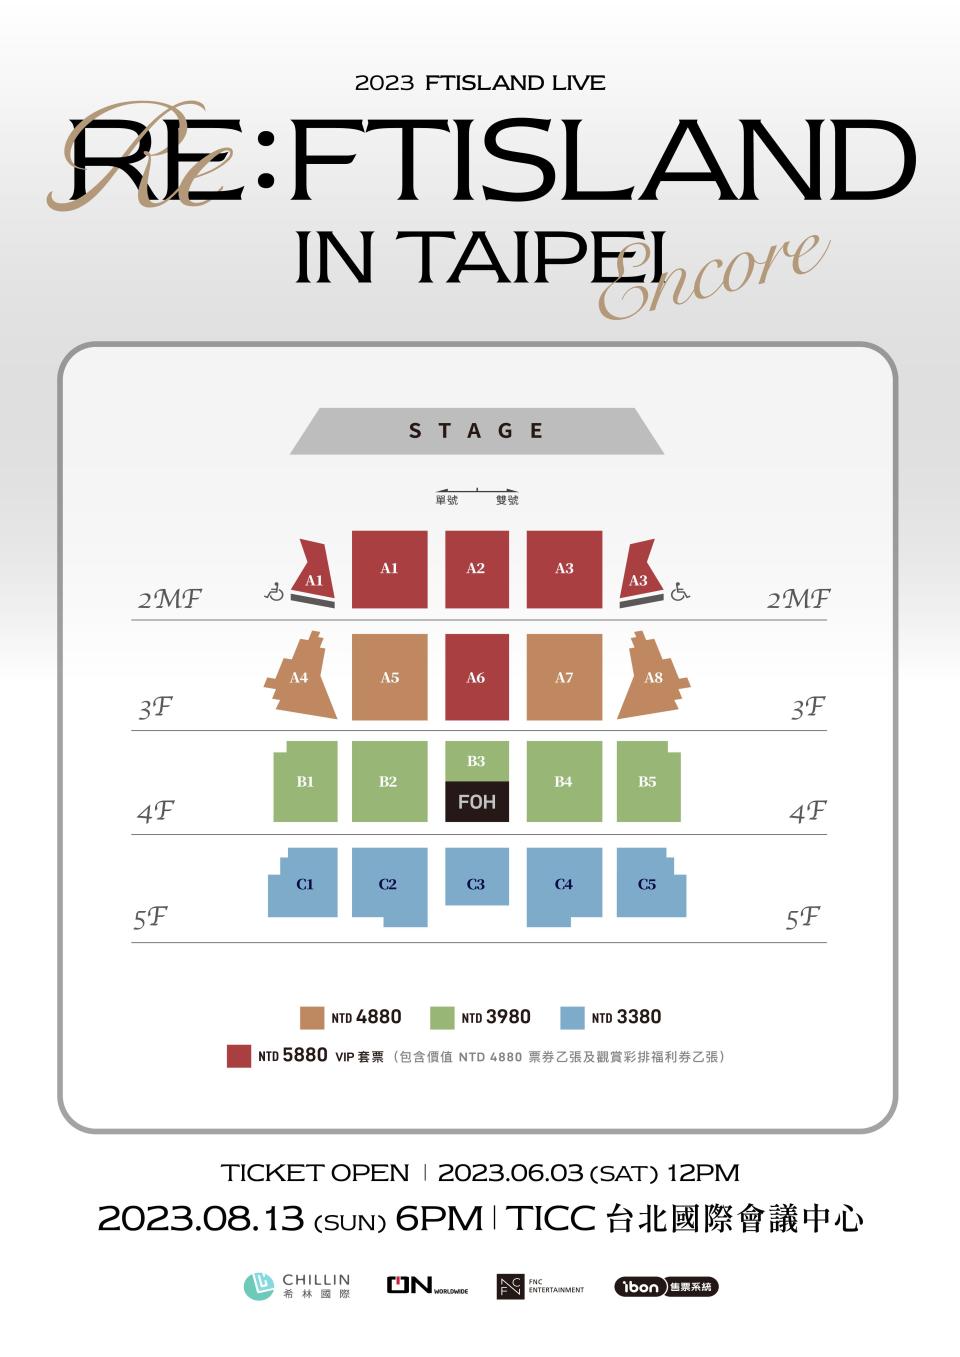 FTISLAND演唱會座位、票價圖。（希林國際Chillin International提供）